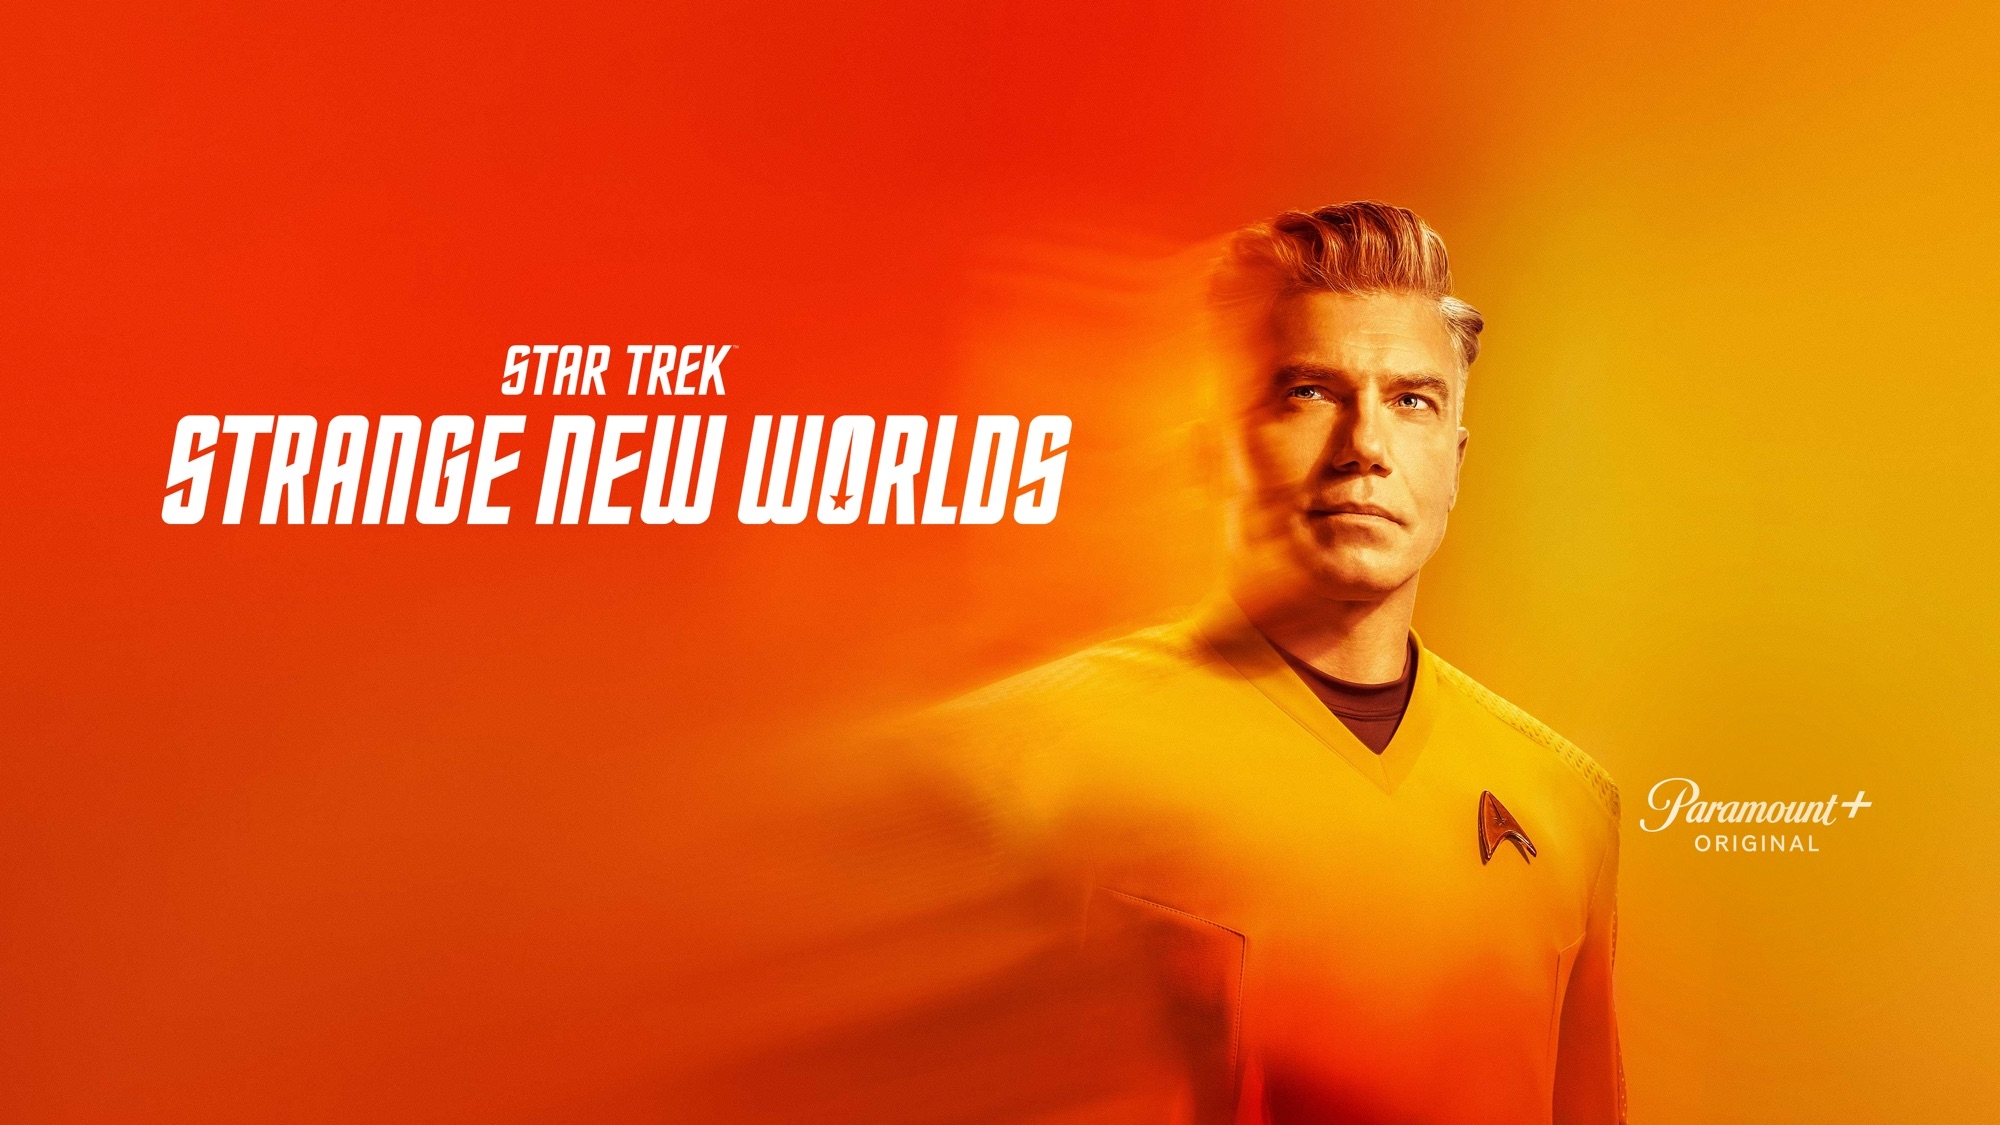 USS Enterprise Star Trek Strange New Worlds by Gazomg on DeviantArt